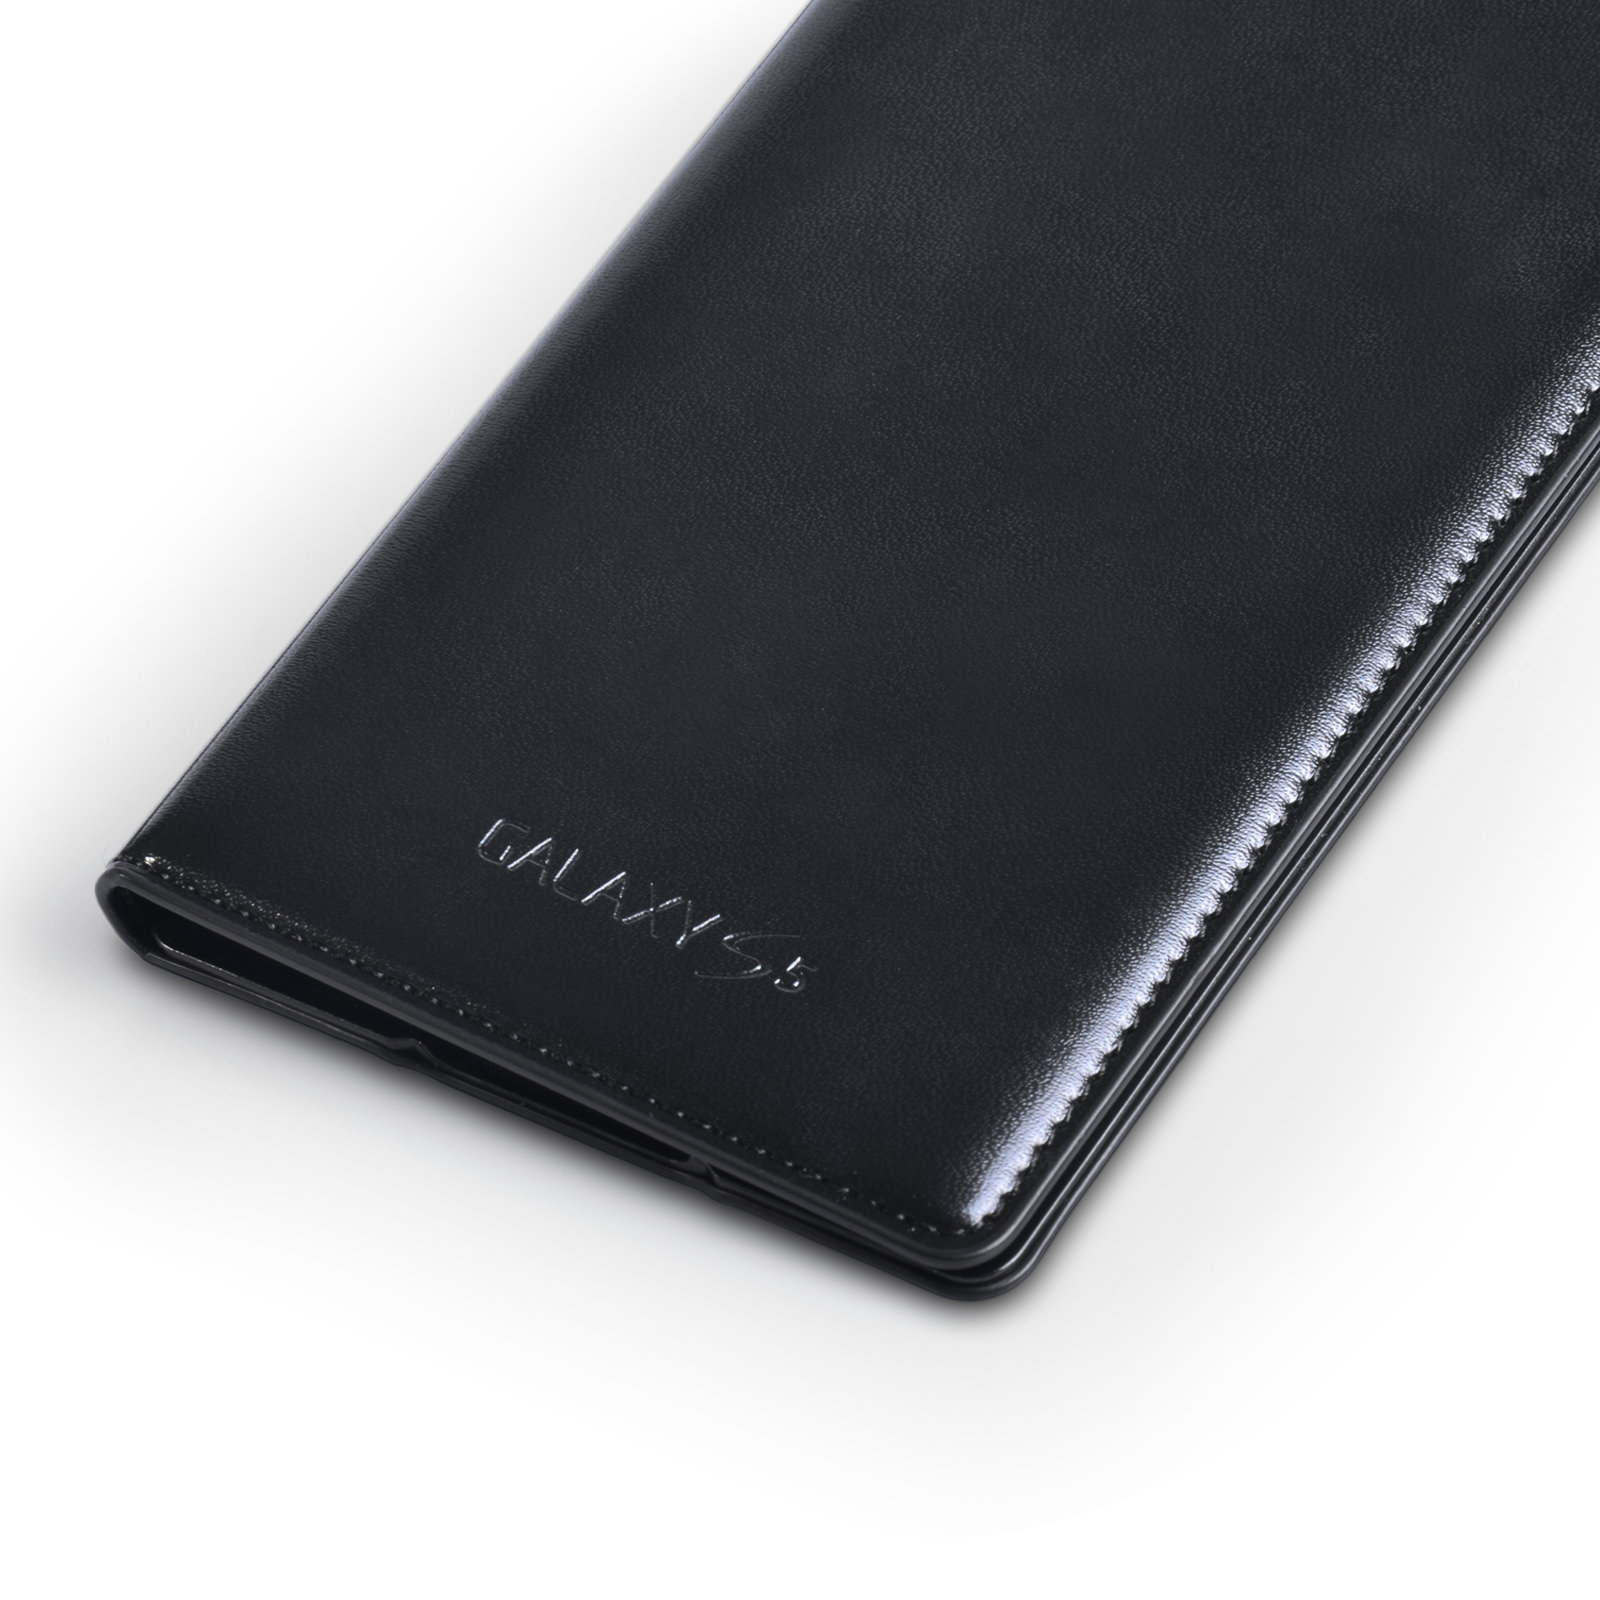 Official Samsung Galaxy S5 Flip Wallet Cover - Black